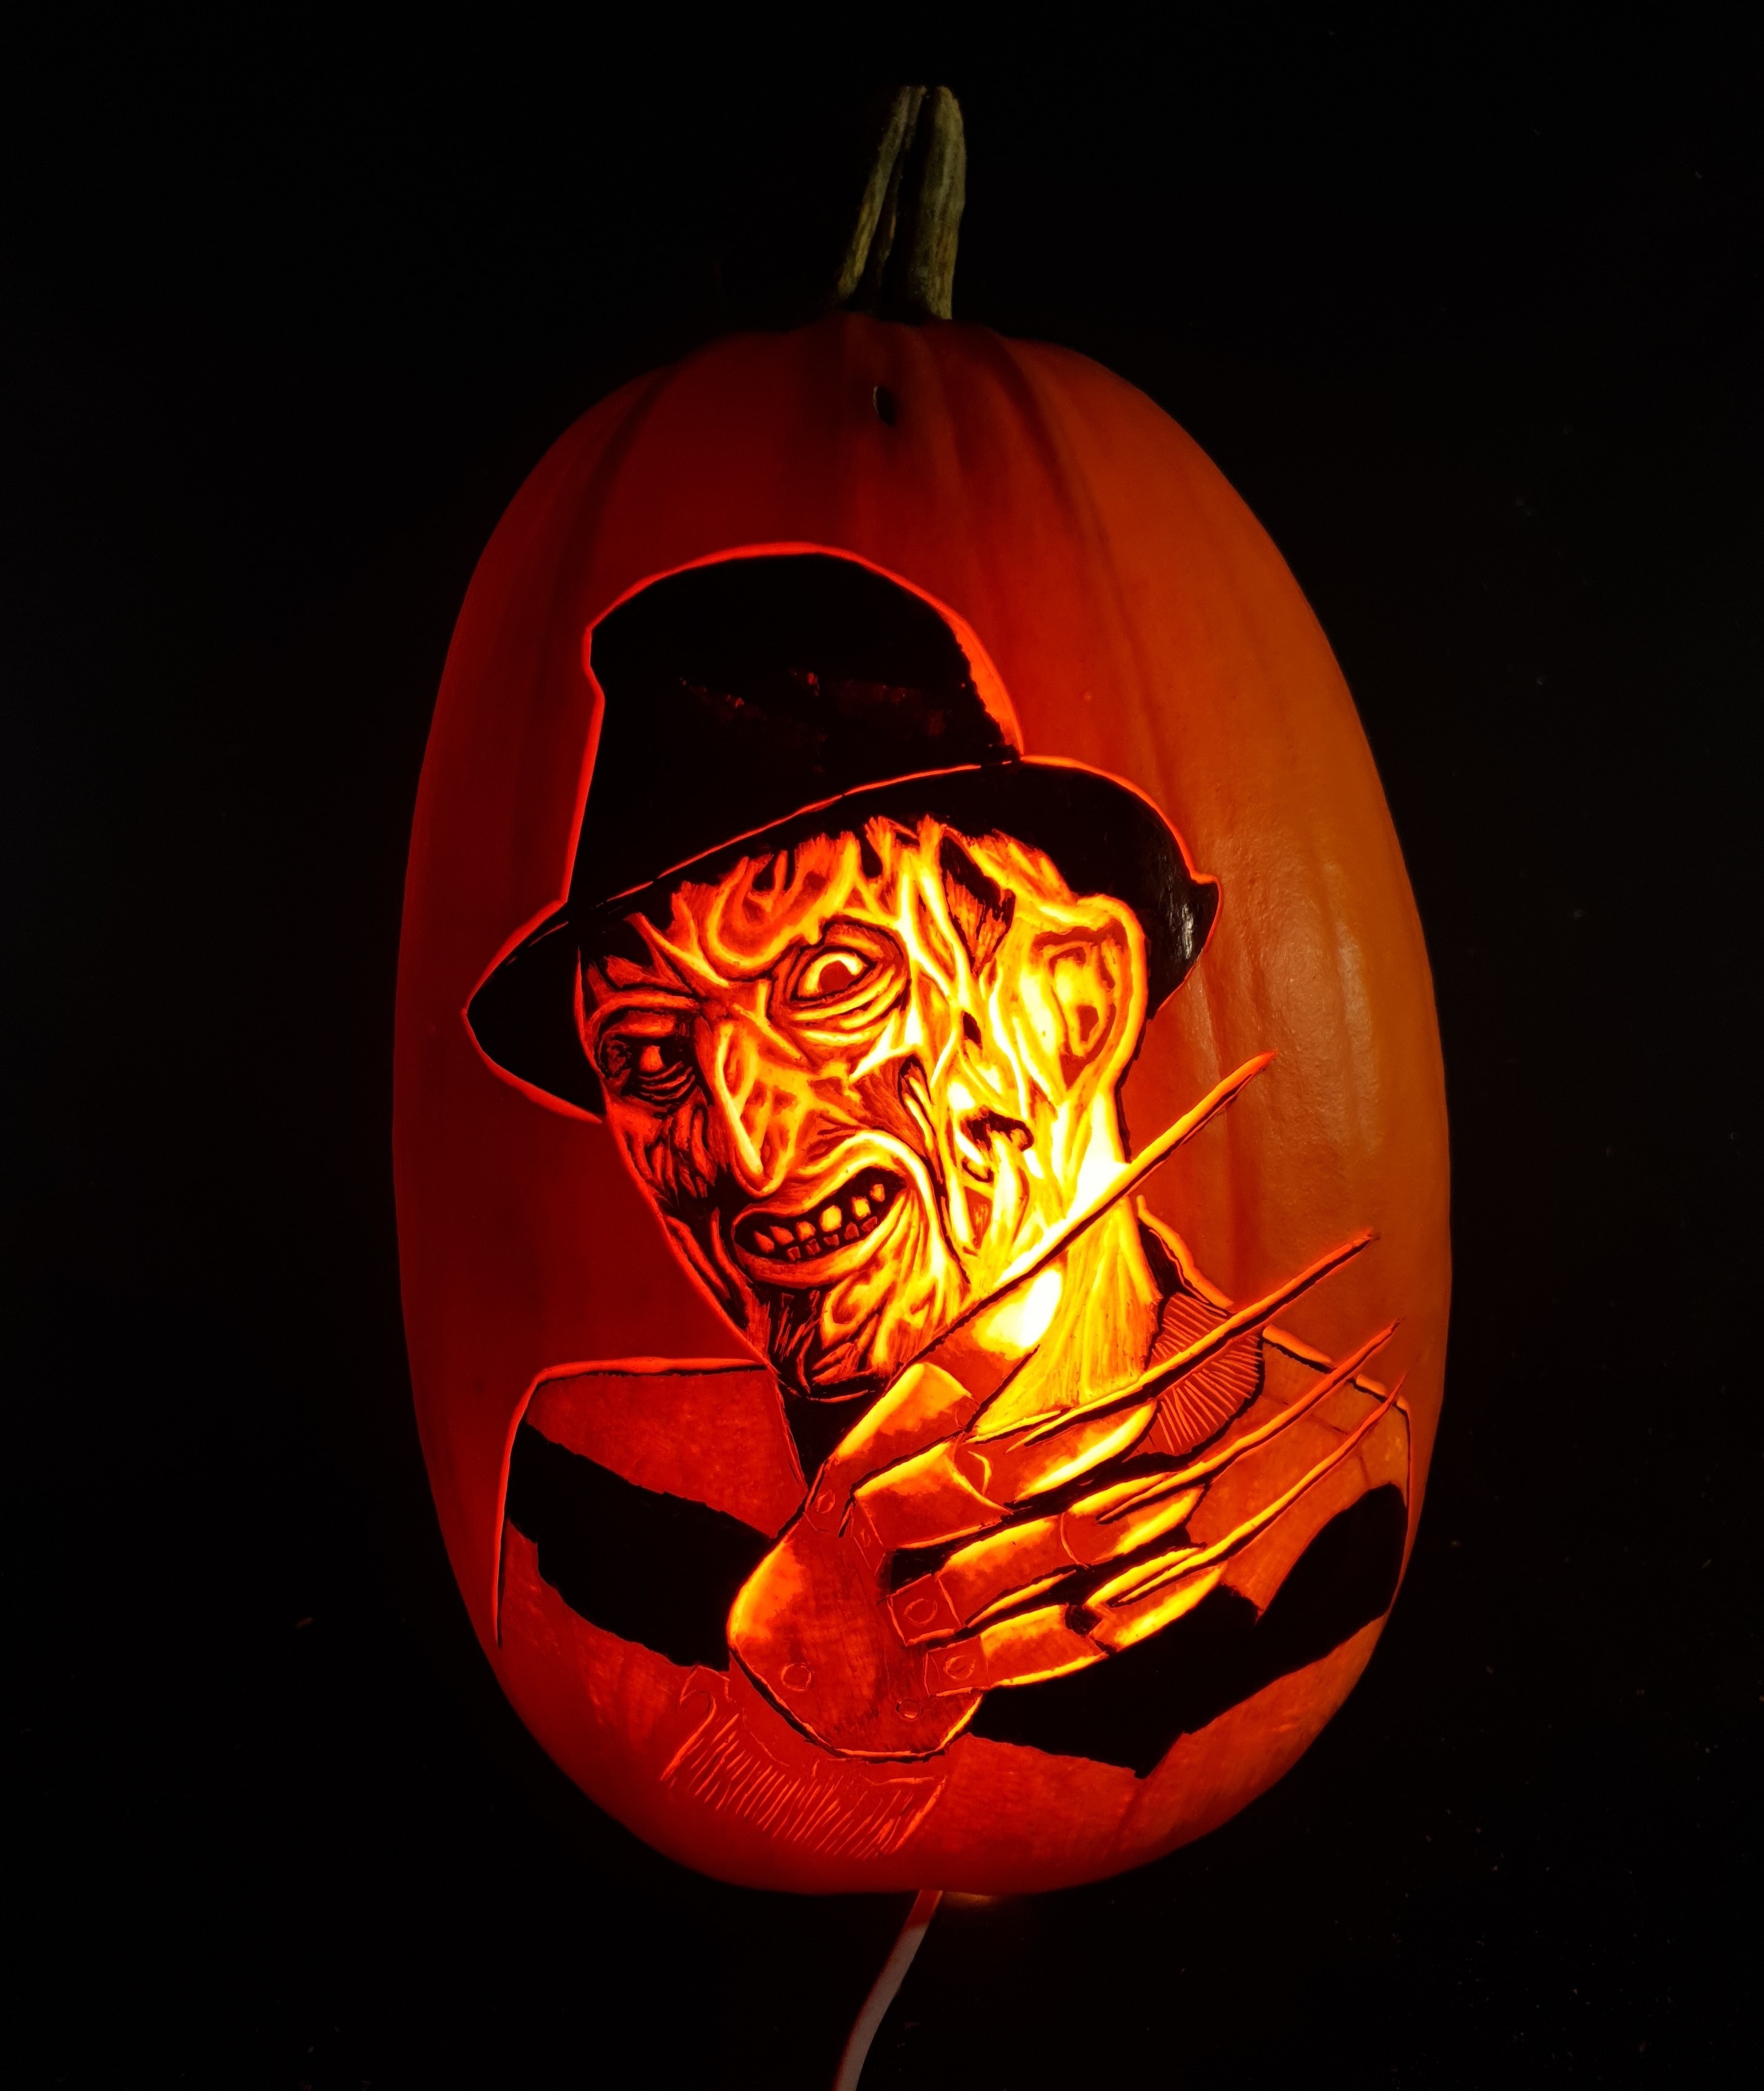 Freddy Krueger carved on a pumpkin